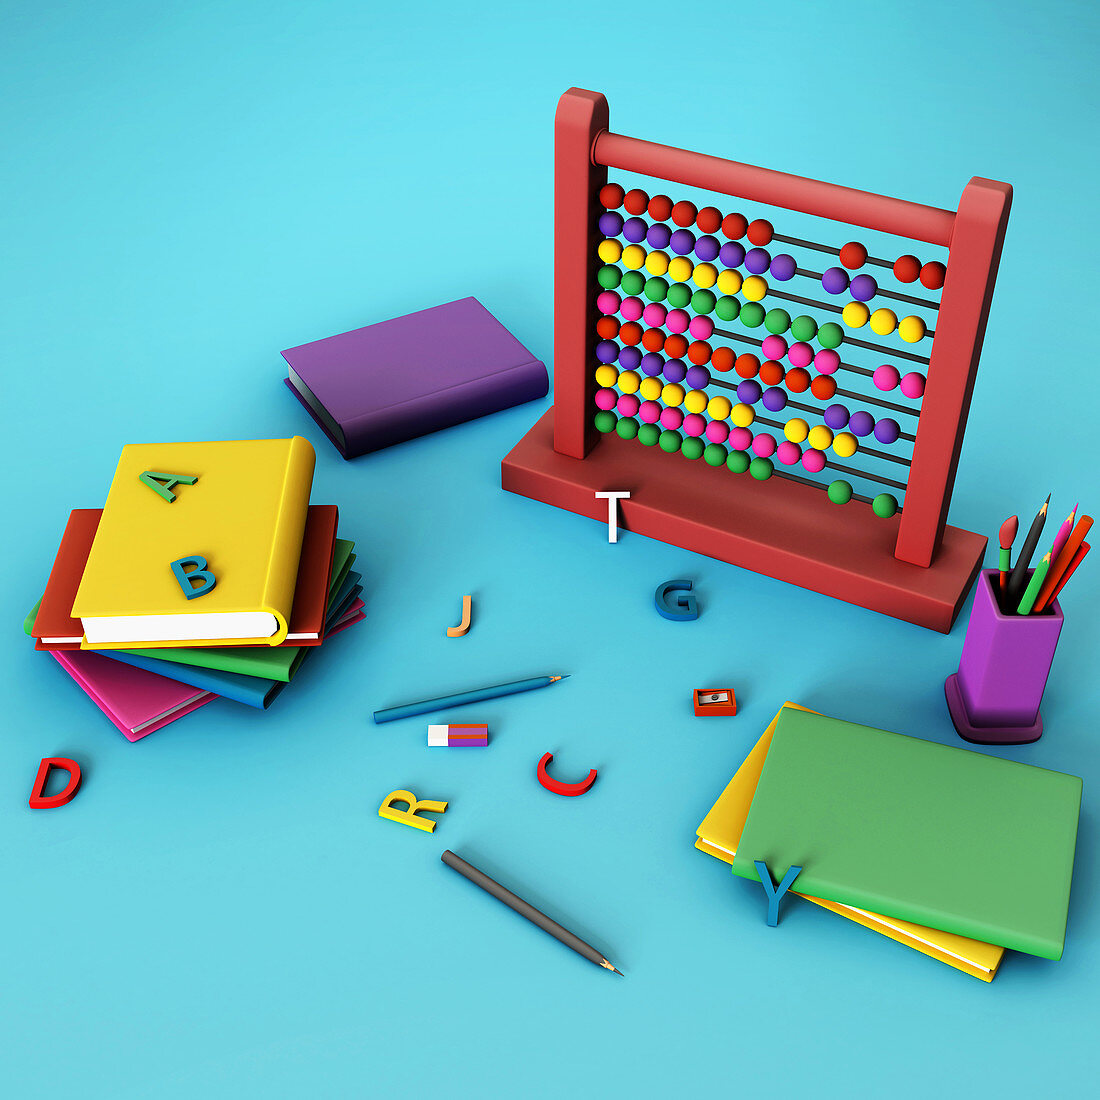 Illustration of education equipment